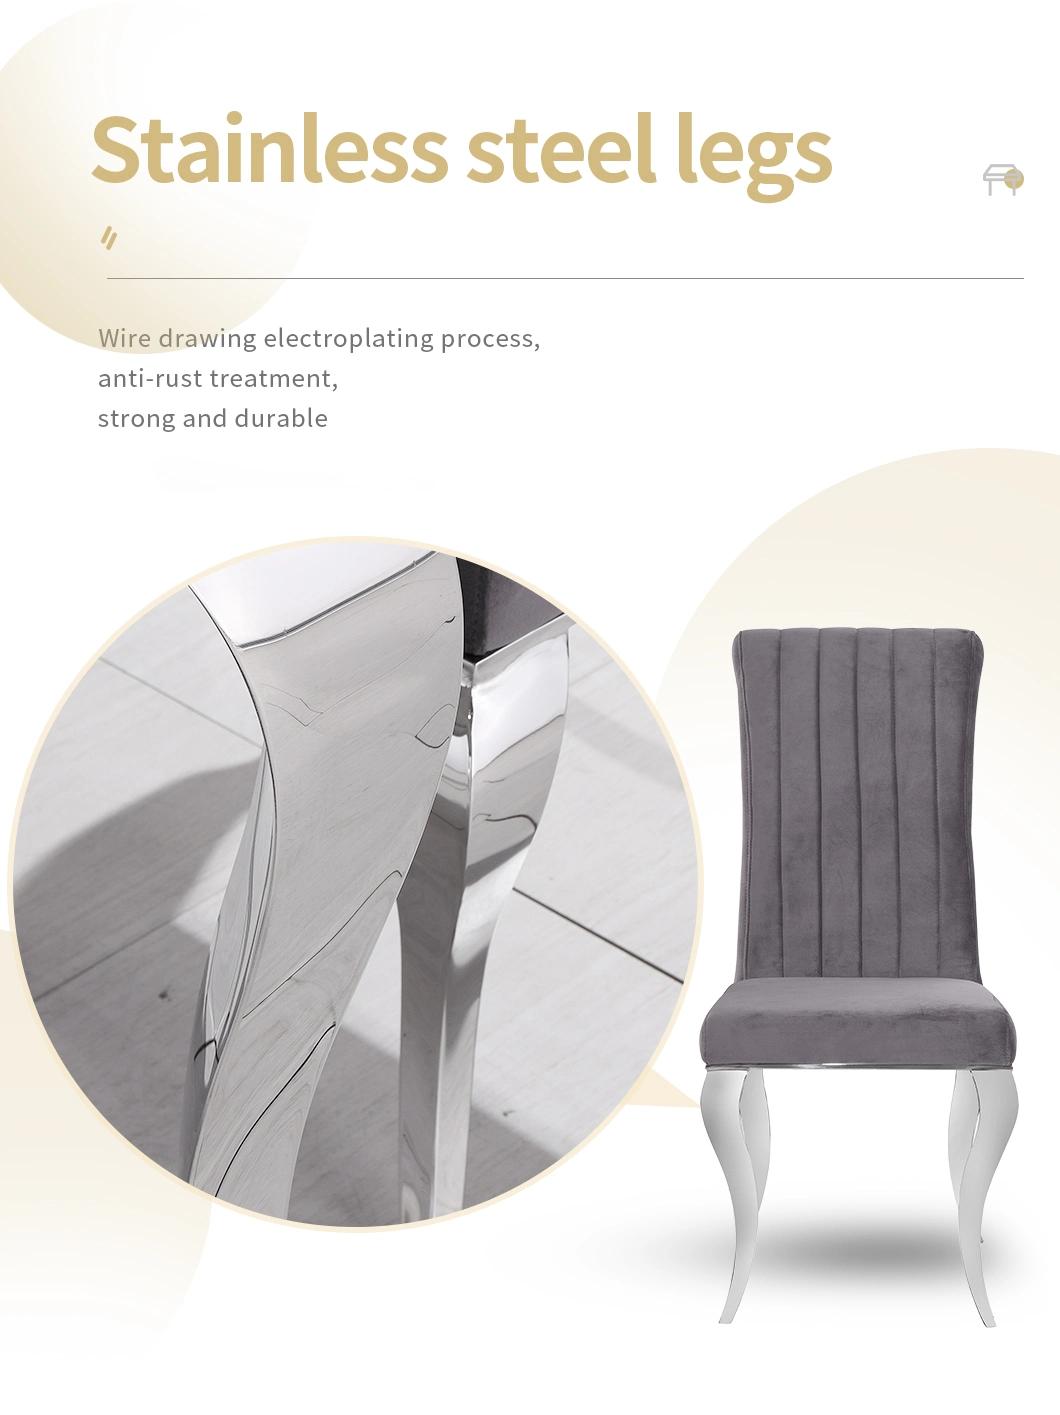 Factory Supply High Quality Golden Stainless Steel Frame Velvet Dining Chair